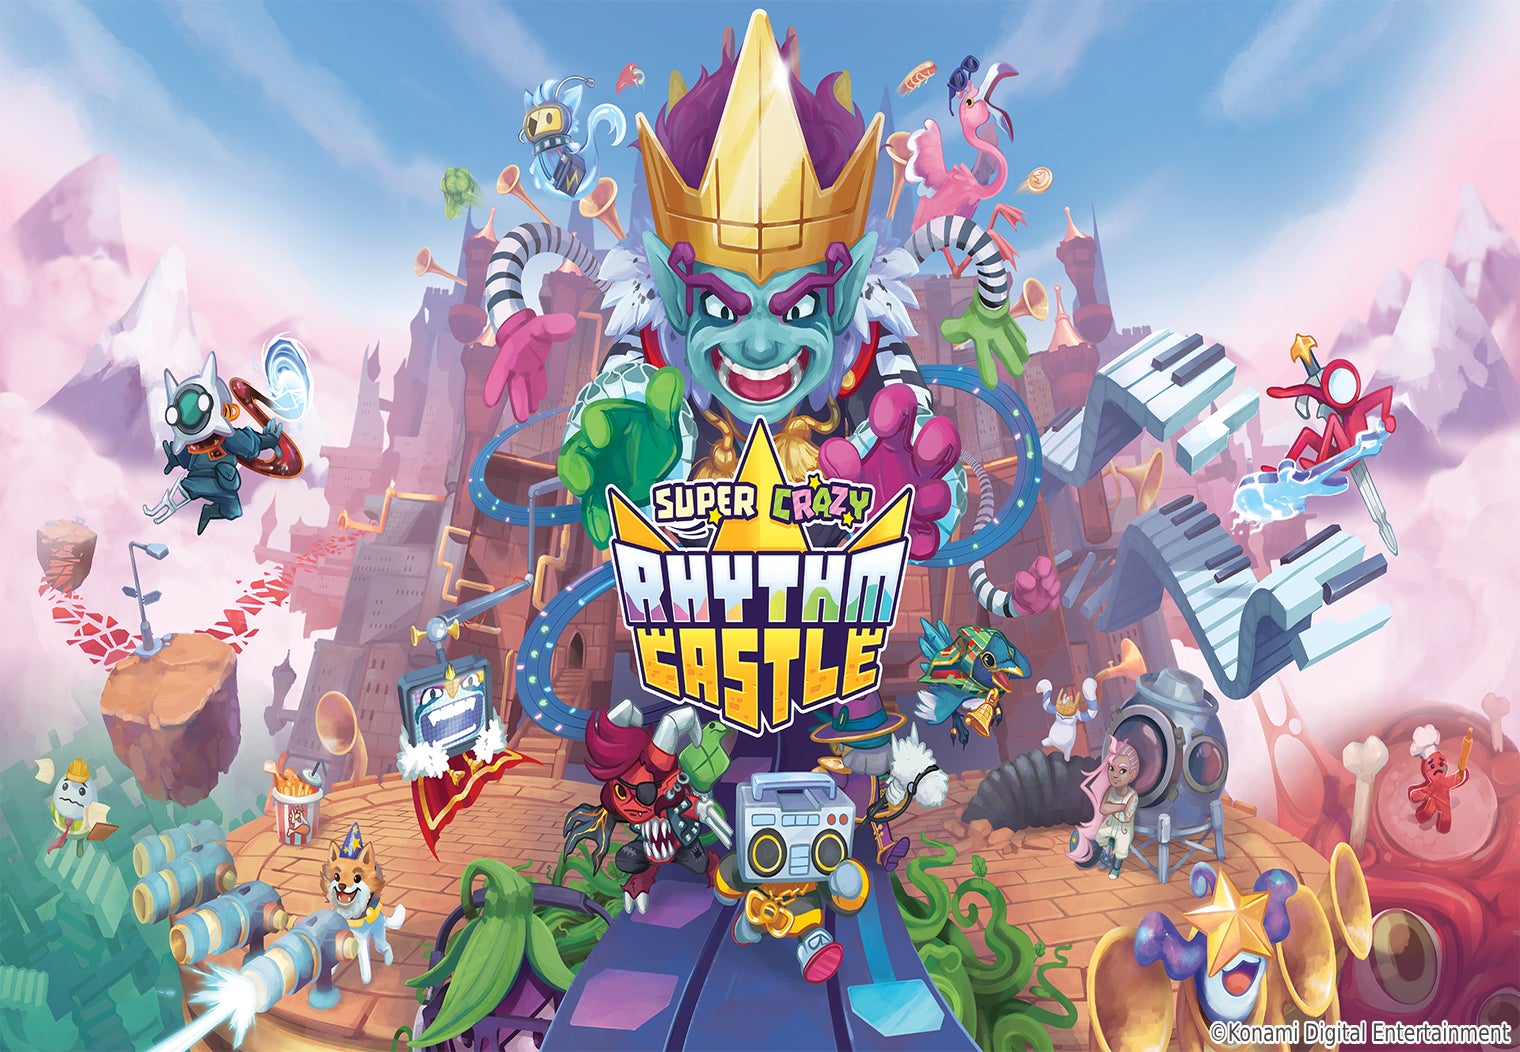 『Super Crazy Rhythm Castle』Steam Nextフェスで無料体験版を配信中！